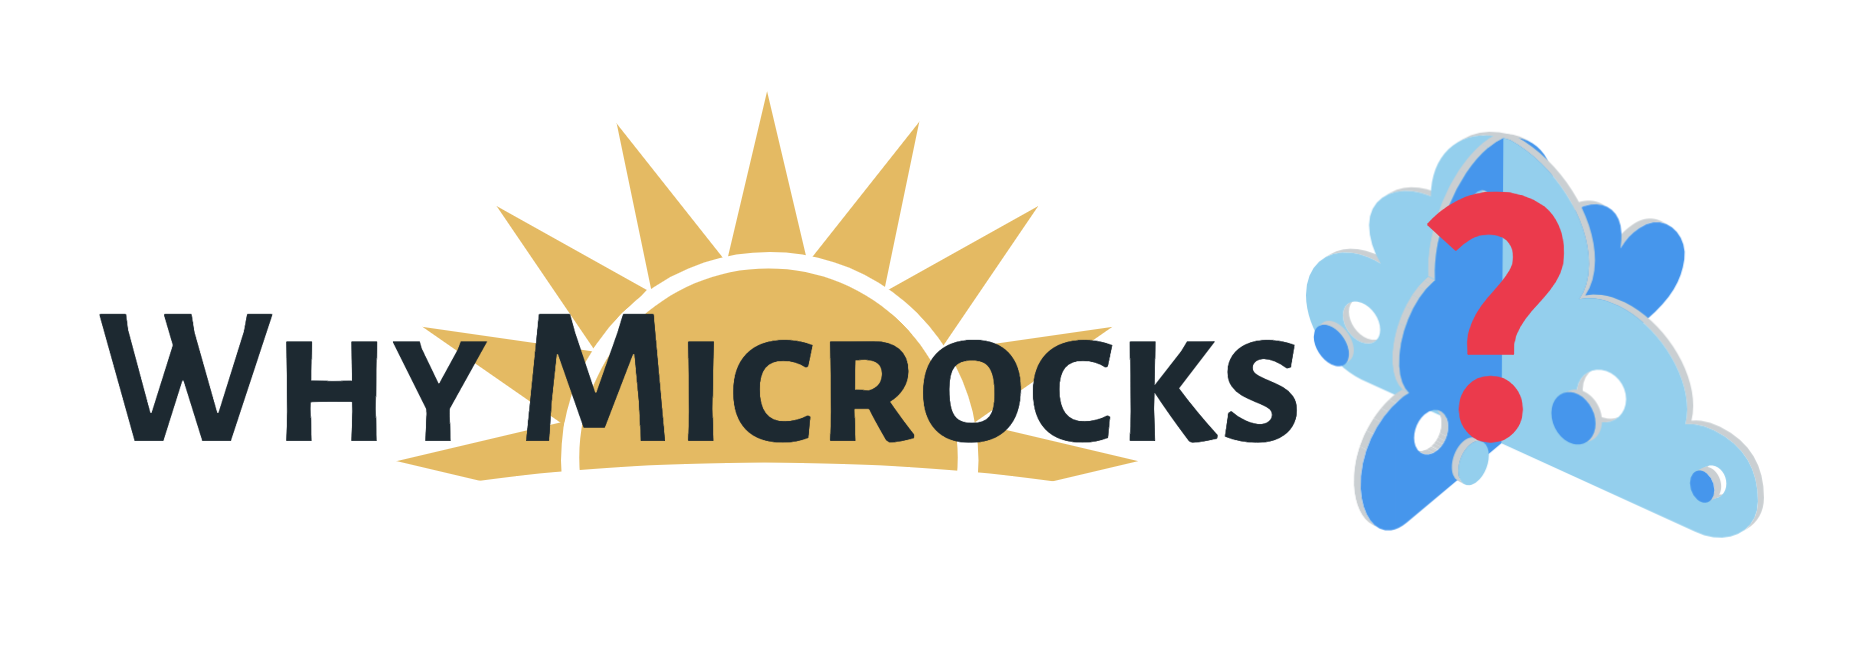 Why Microcks?